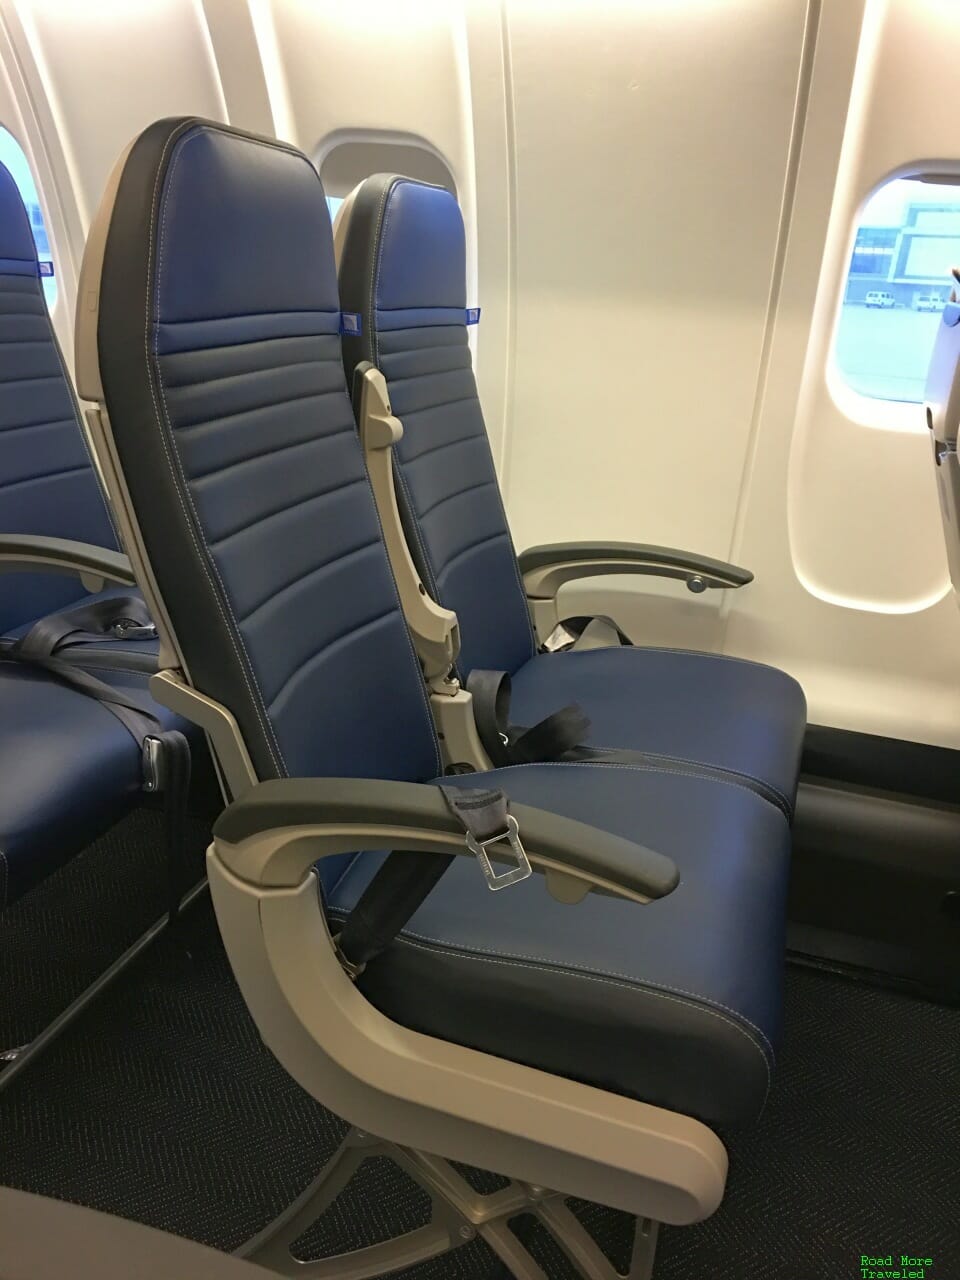 United CRJ-550 Economy Class seats